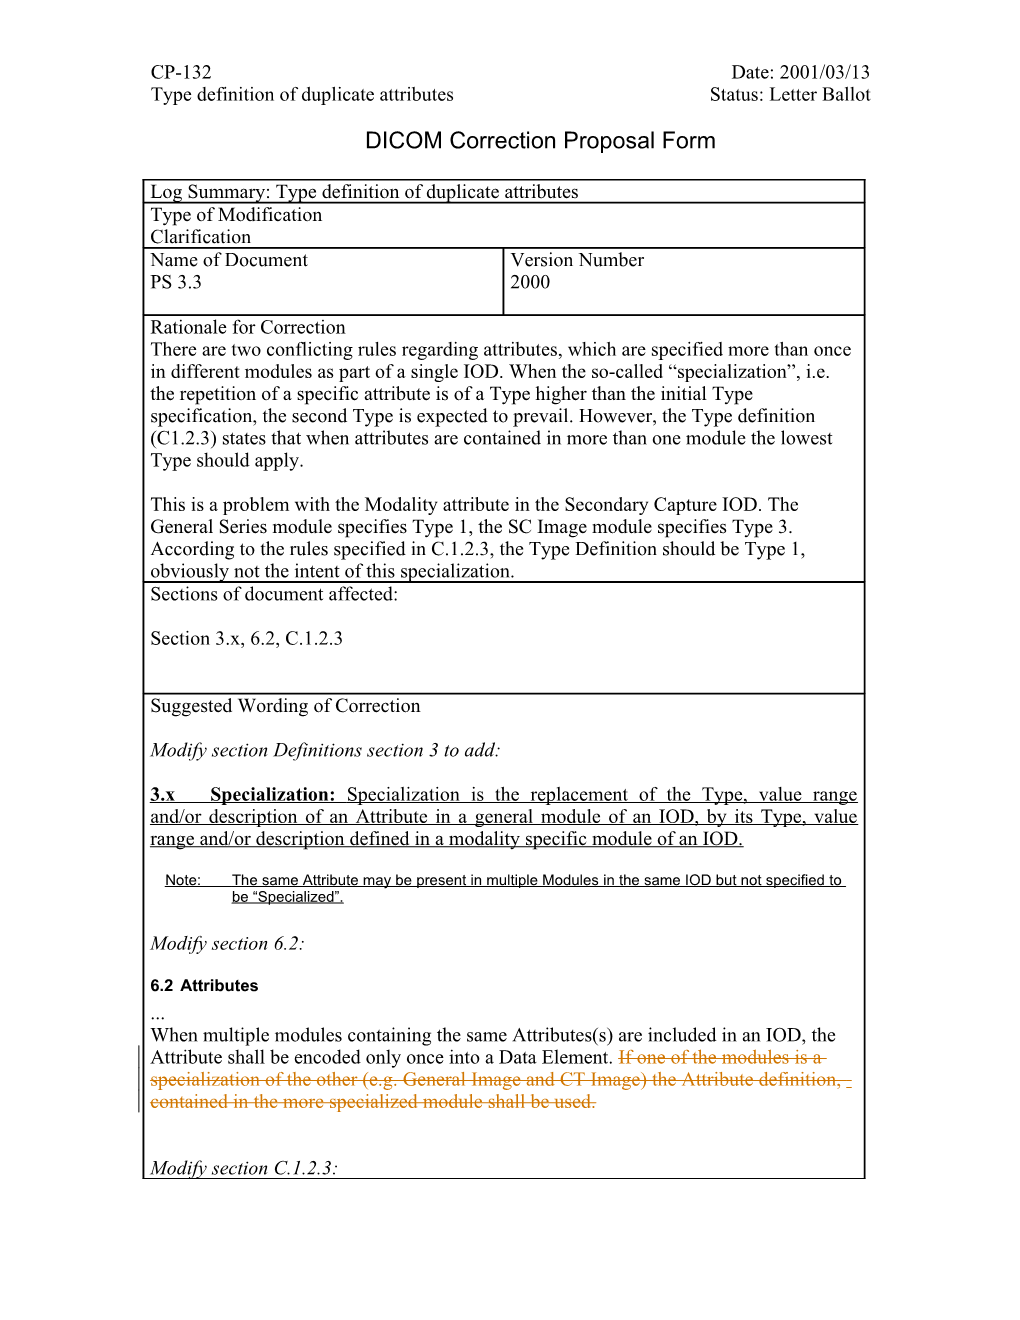 DICOM Correction Proposal Form - Final Text